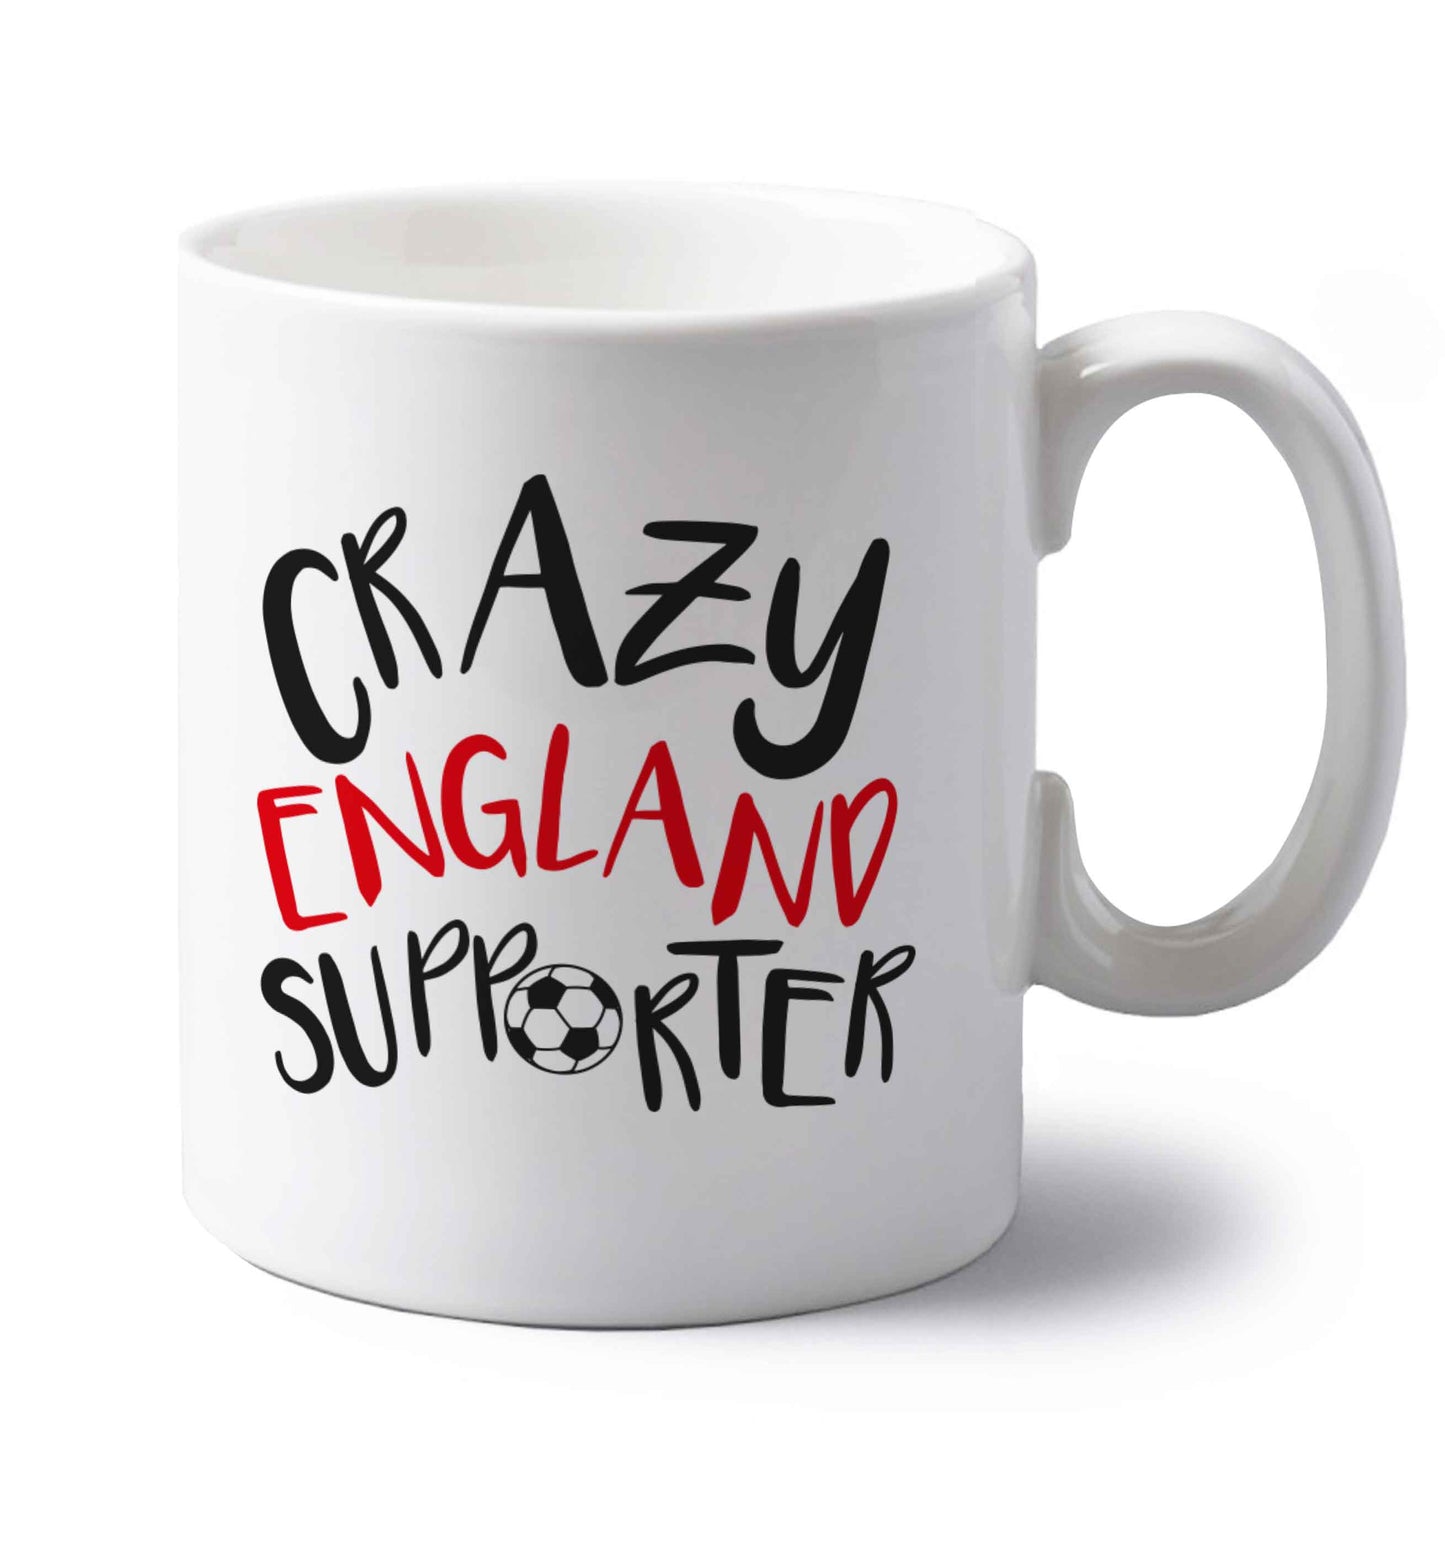 Crazy England supporter left handed white ceramic mug 